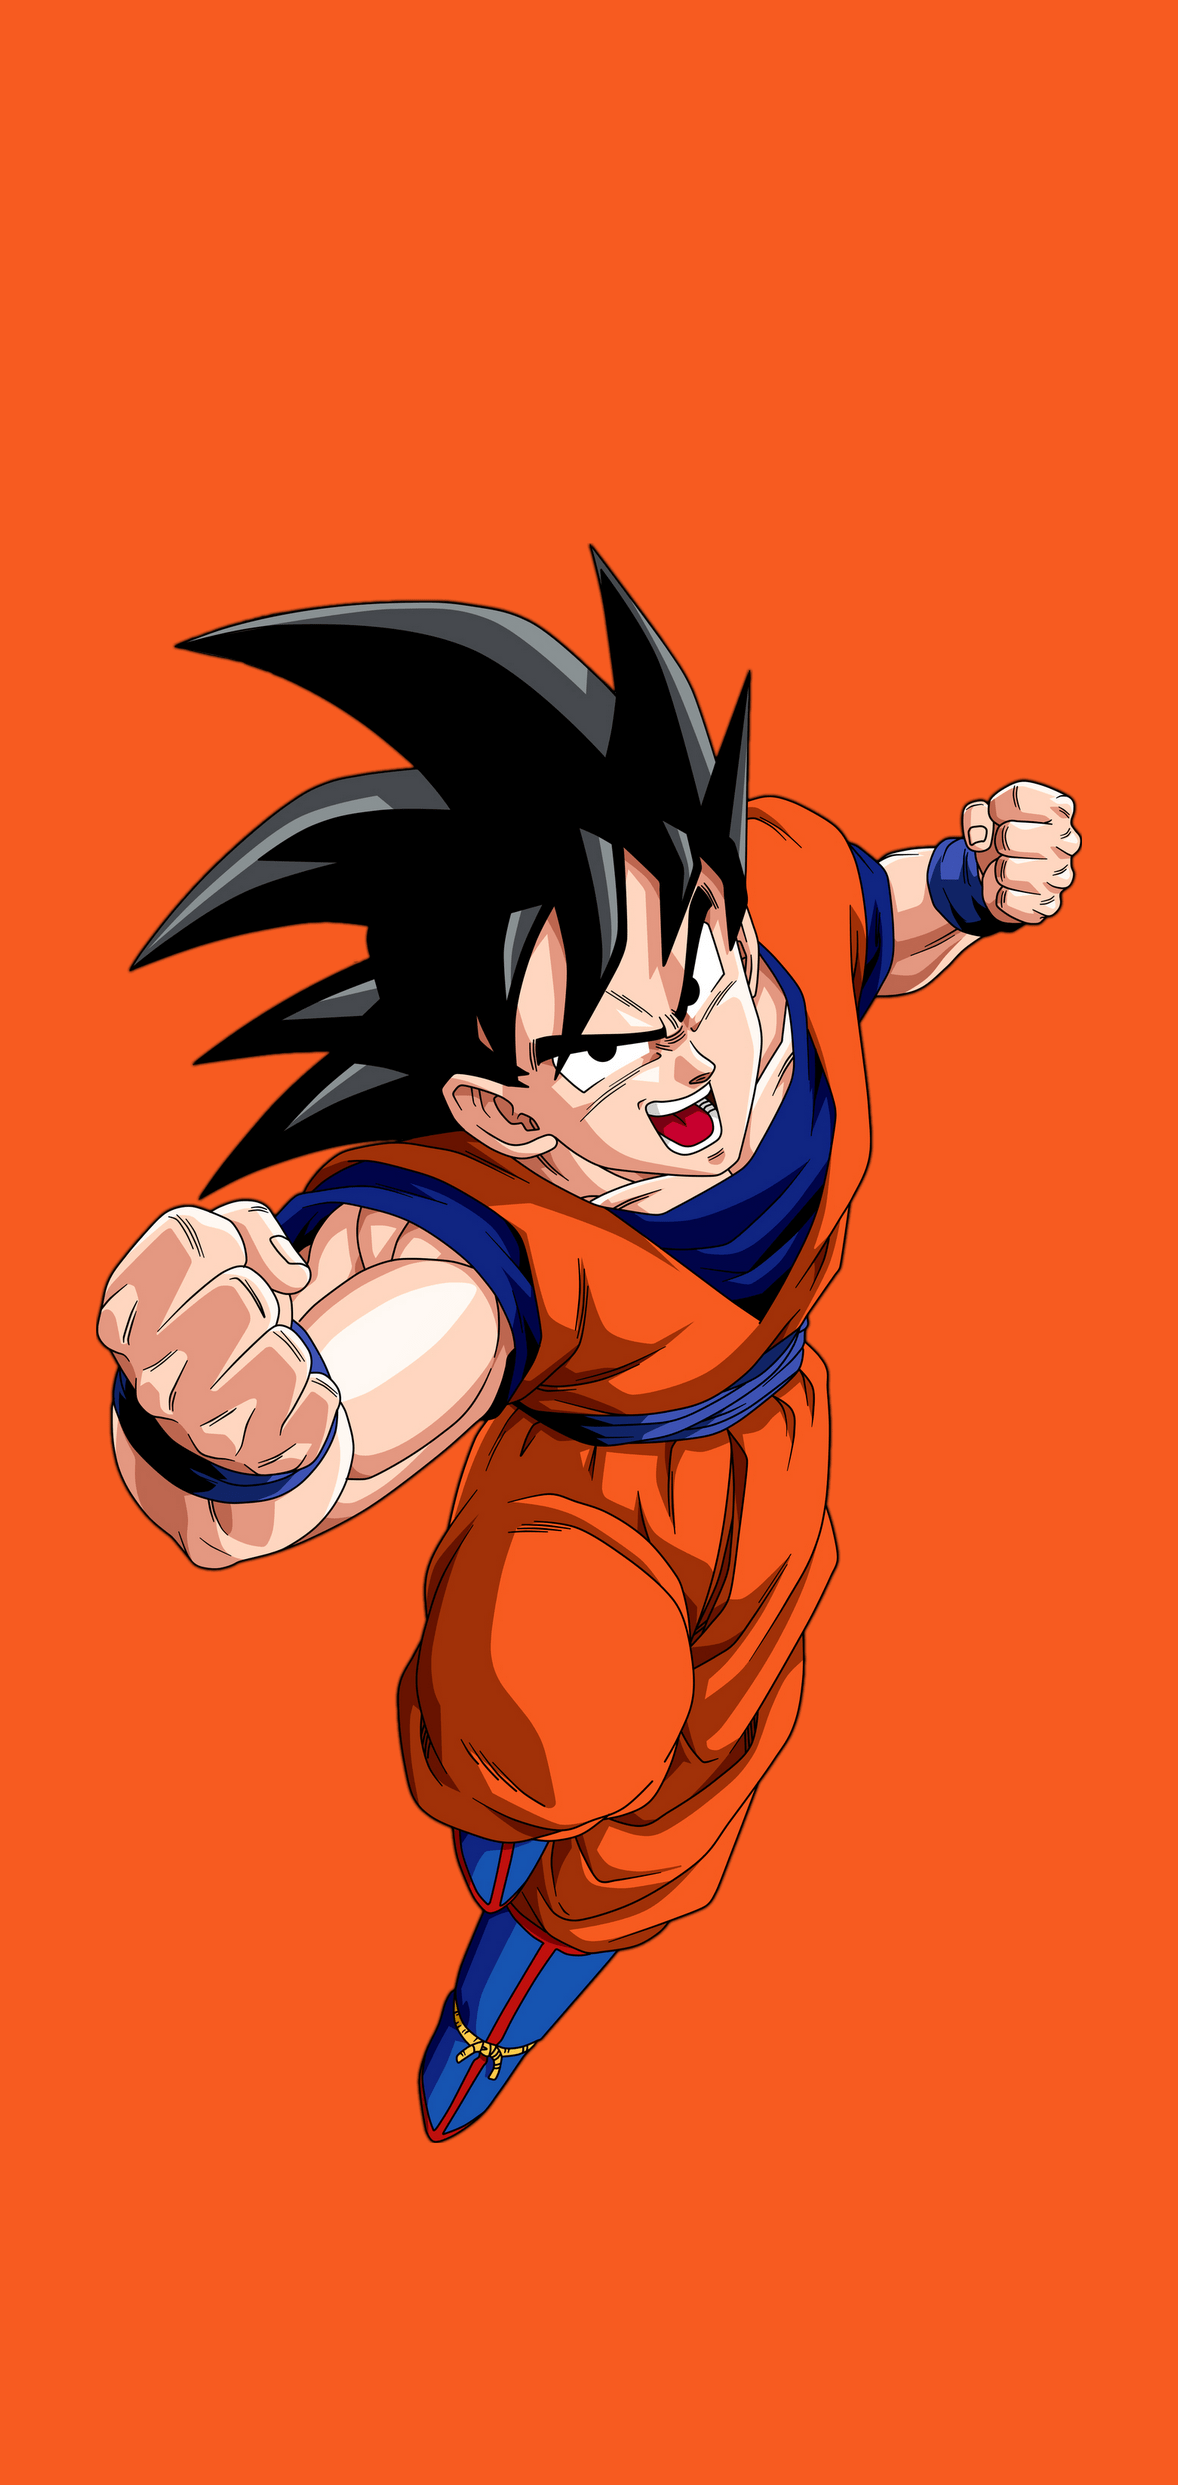 Wallpaper Goku Anime Dbcproject Goku Vegeta Dragon Ball Background   Download Free Image